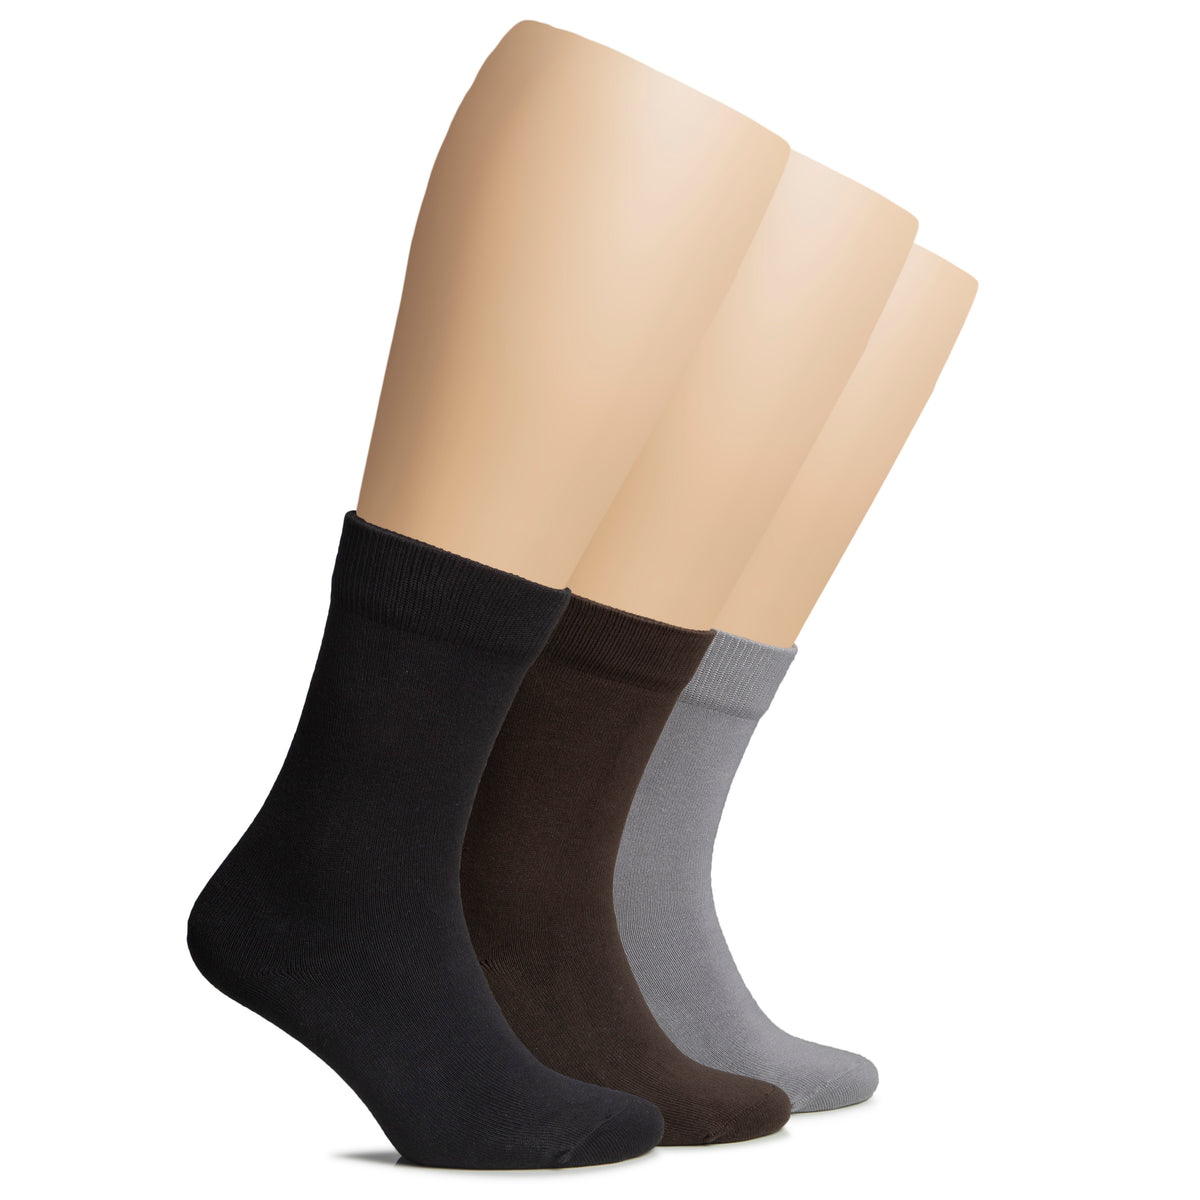 Hugh Ugoli Women Cotton Warm Winter Socks Crew with Seamless Toe, 3 Pairs | Shoe Size: 6-9 | Gray / Black / Brown